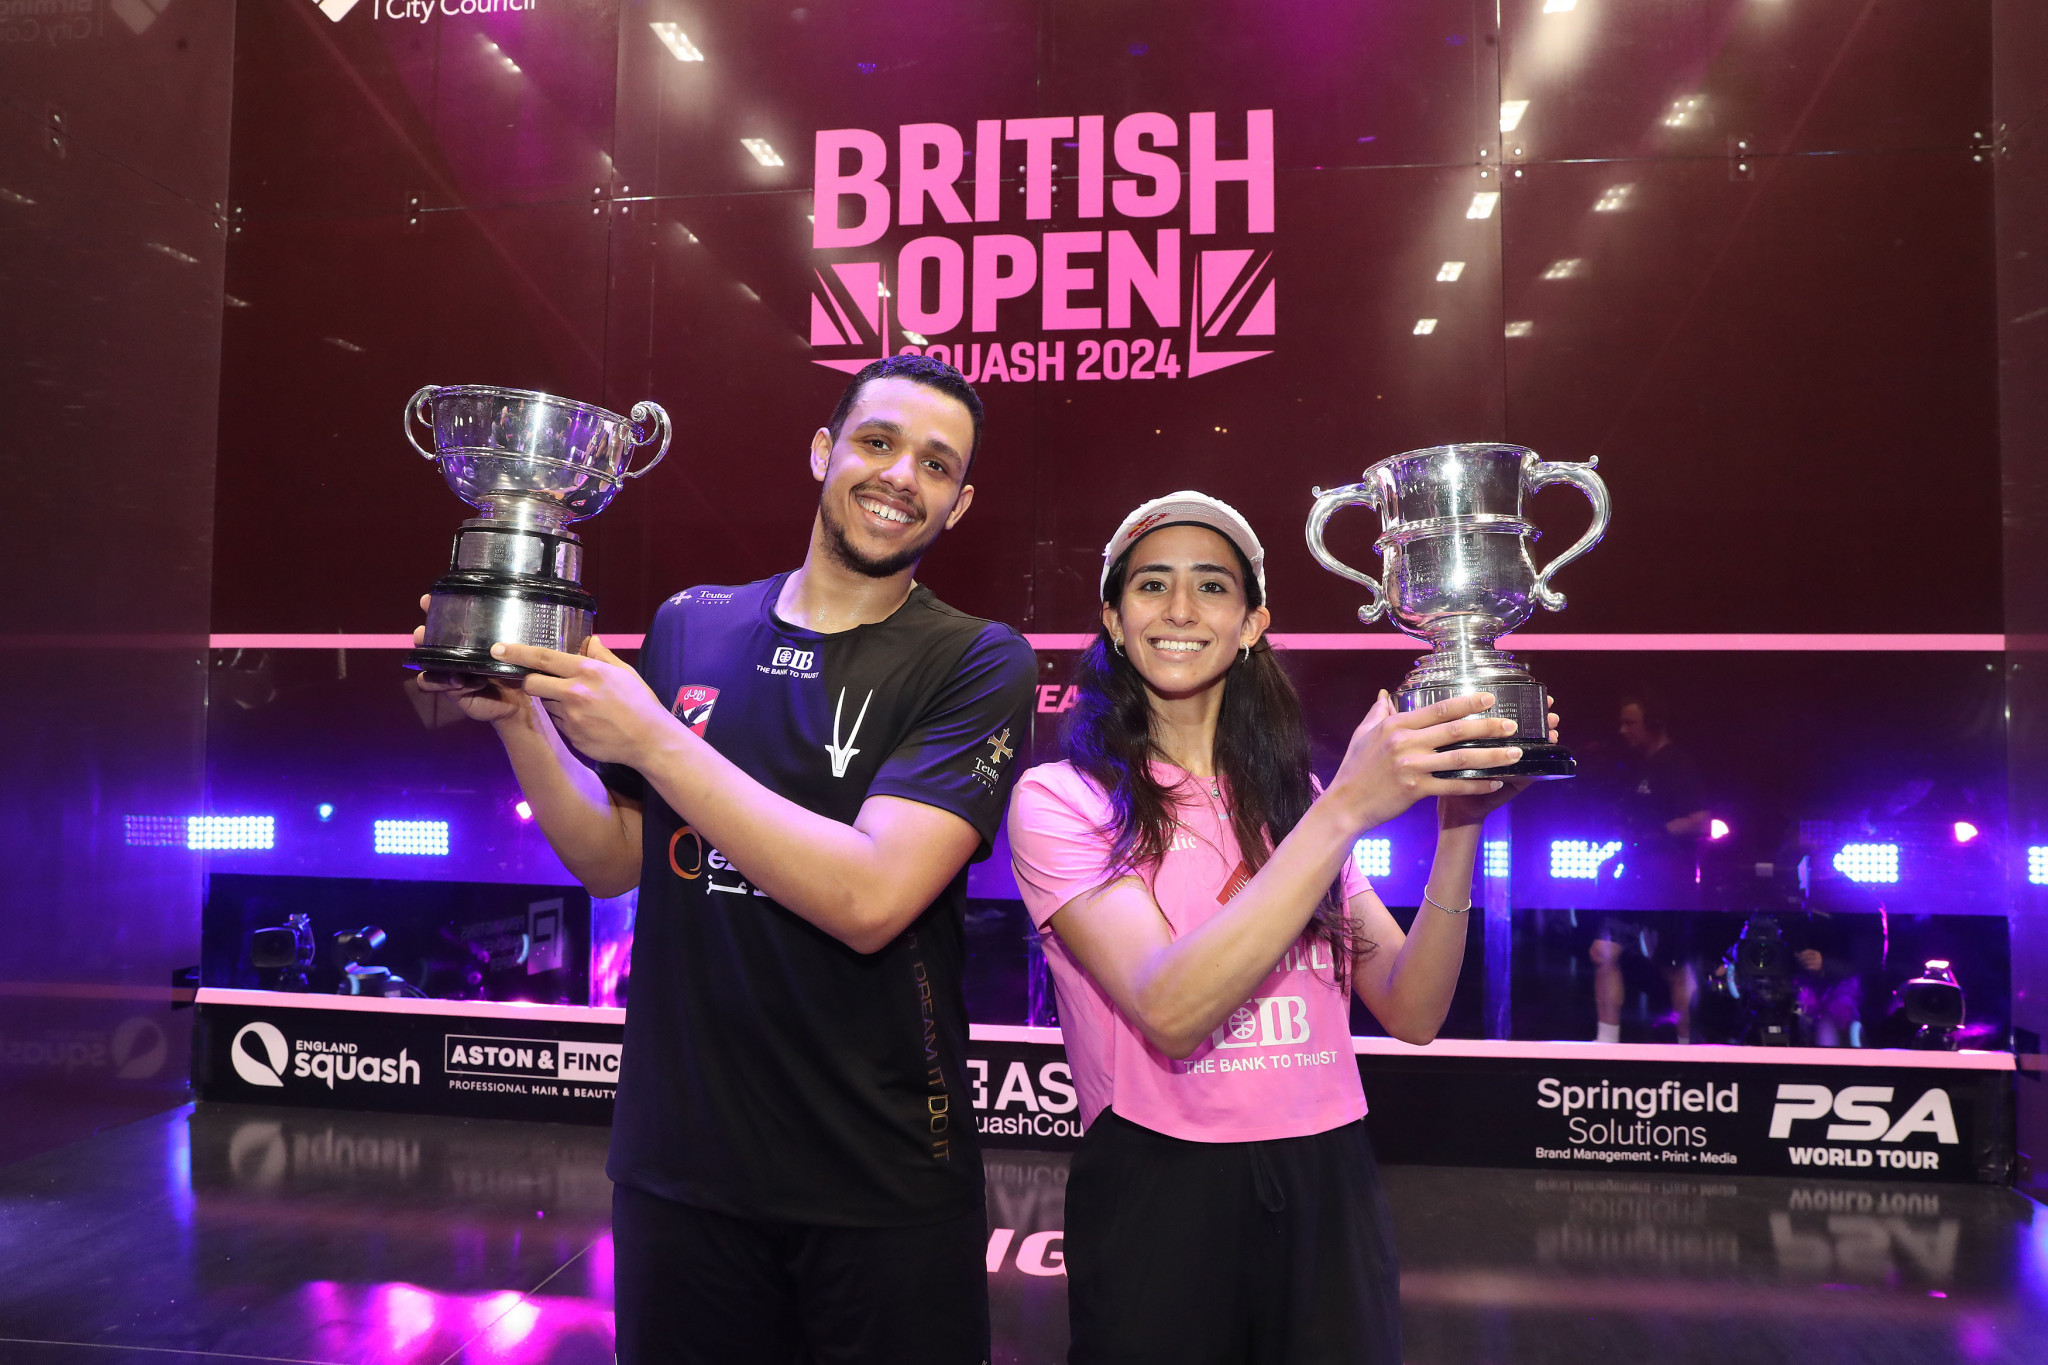 Mostafa Asal and Nouran Gohar both won the men's and women's British Open squash title in Birmingham, respectively. PSA WORLD TOUR